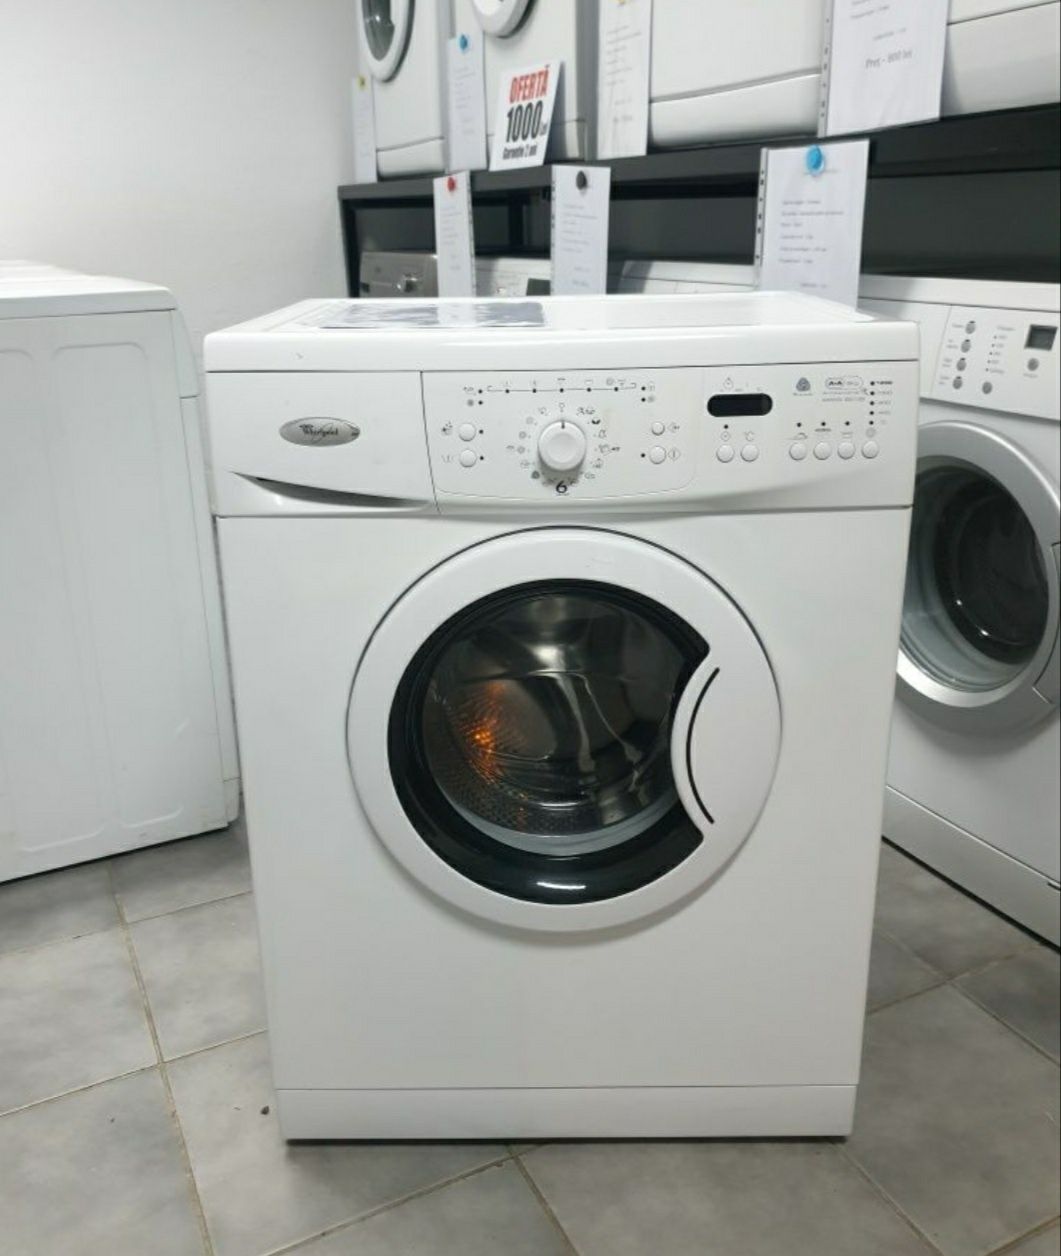 Masina de spălat rufe Whirlpool  / PRET 5oo Lei. PRET REAL